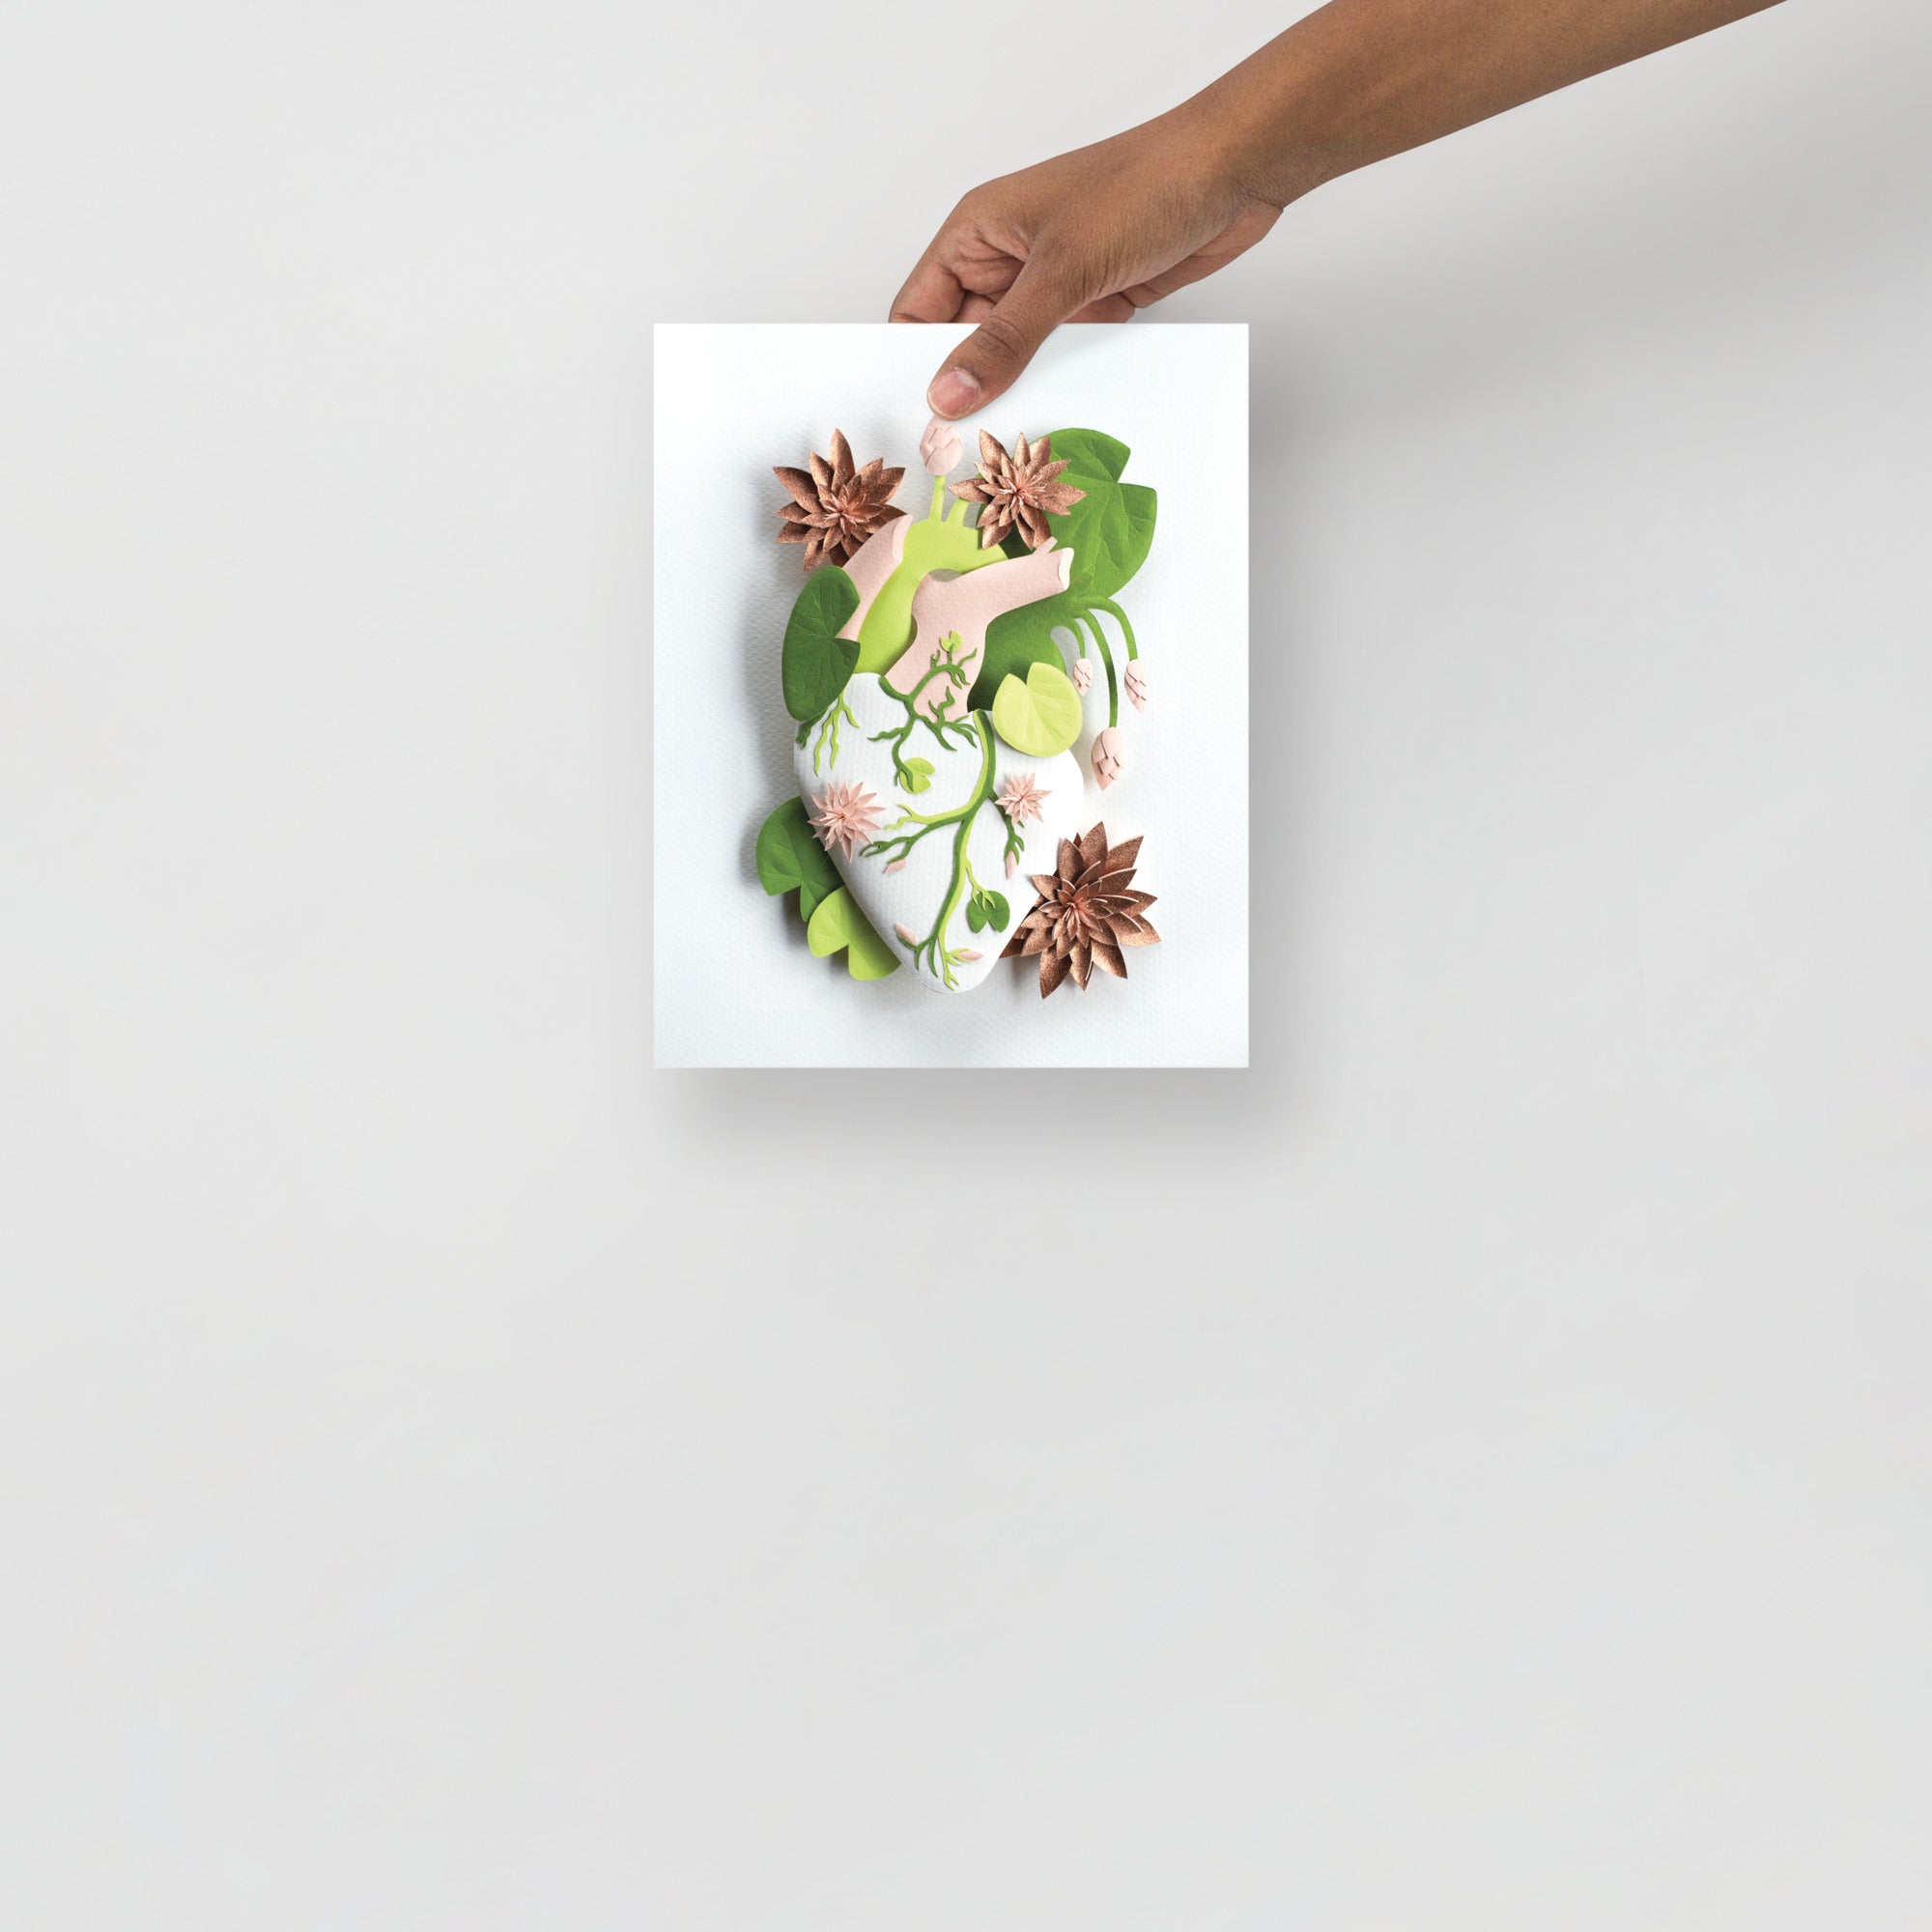 Healing Heart: Waterlilies 8" x 10" print